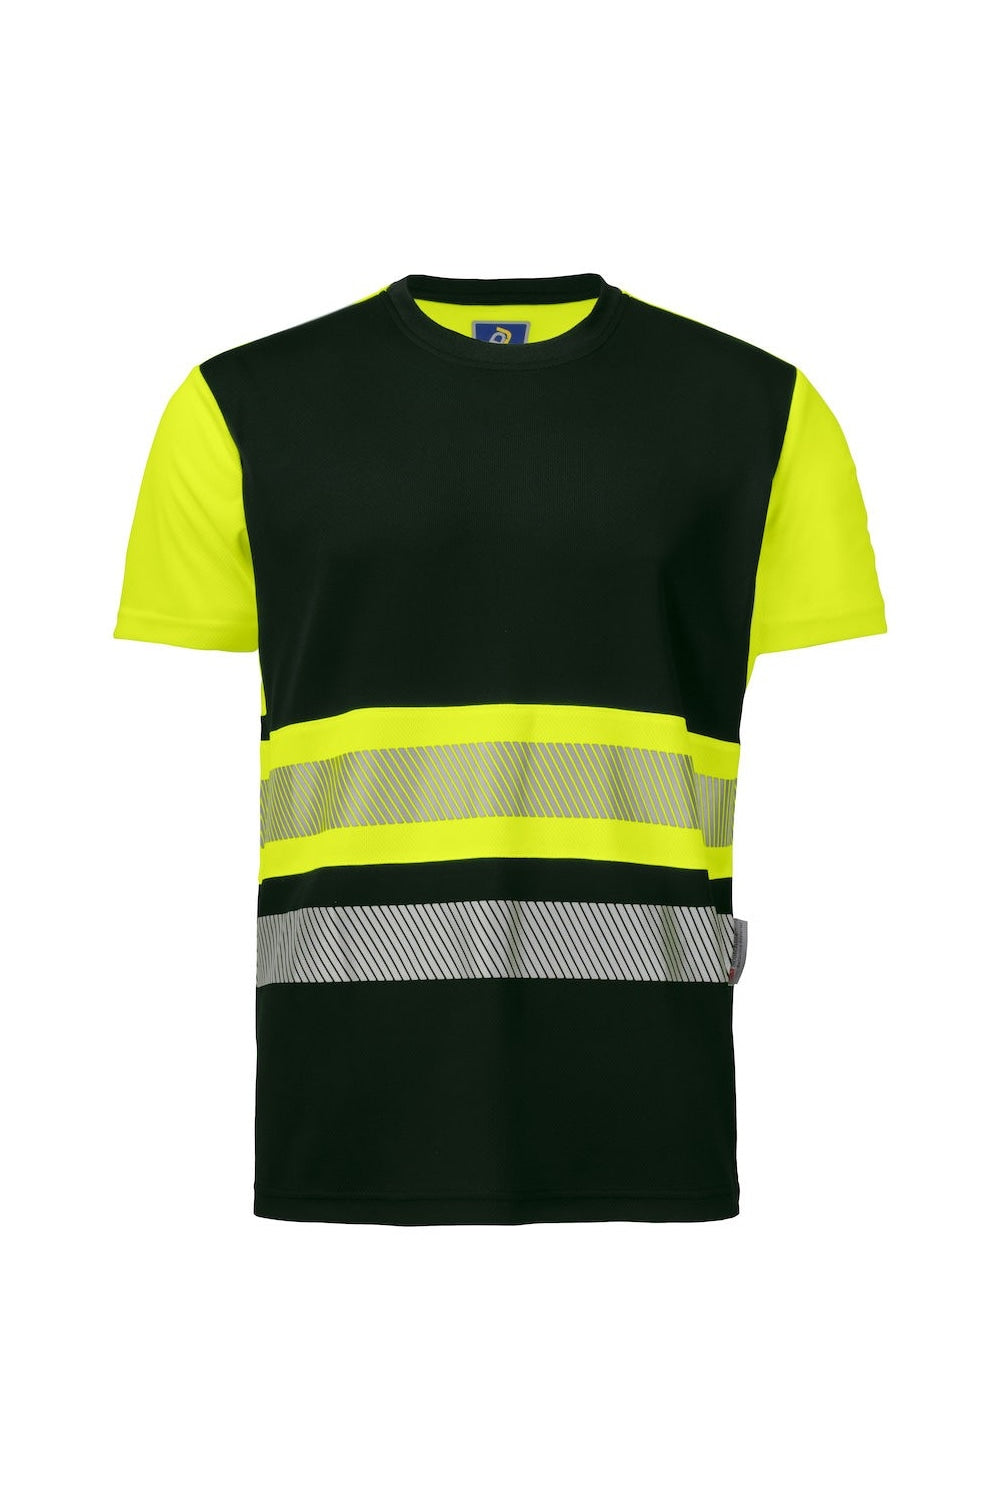 Projob Mens Reflective Tape T-Shirt (Yellow/Black)